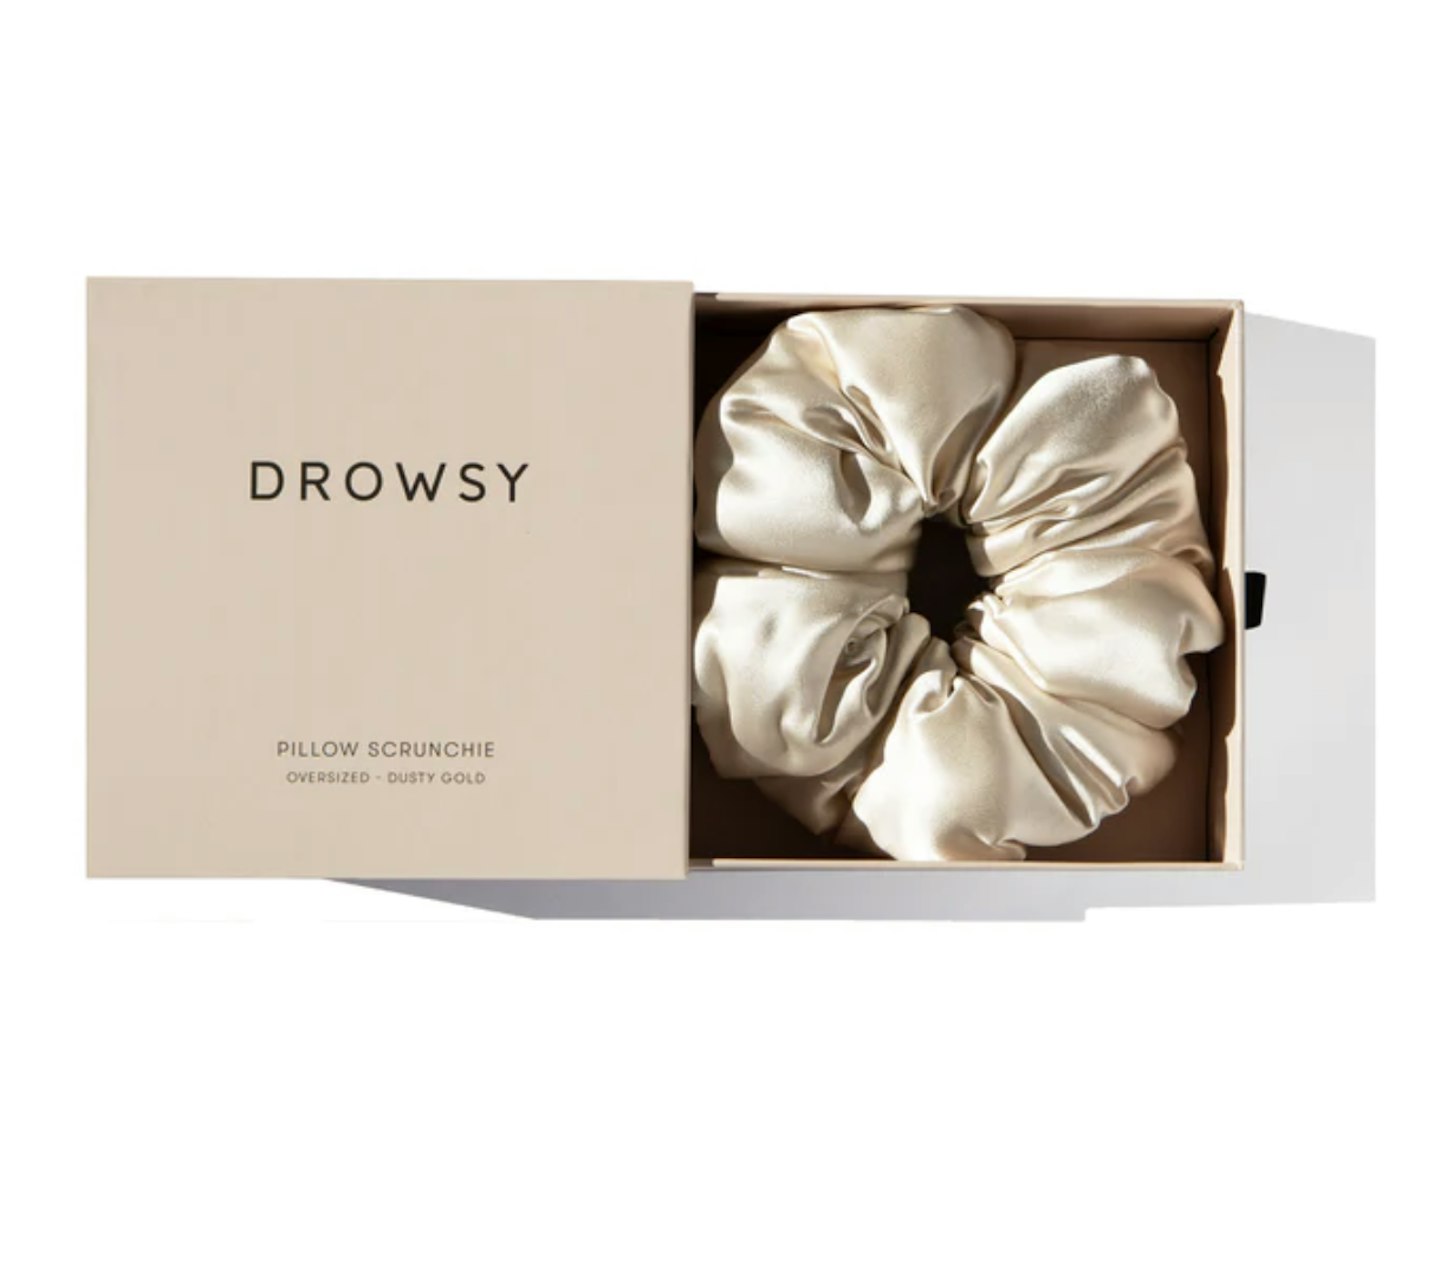 Drowsy Pillow Scrunchie - Dusty Gold